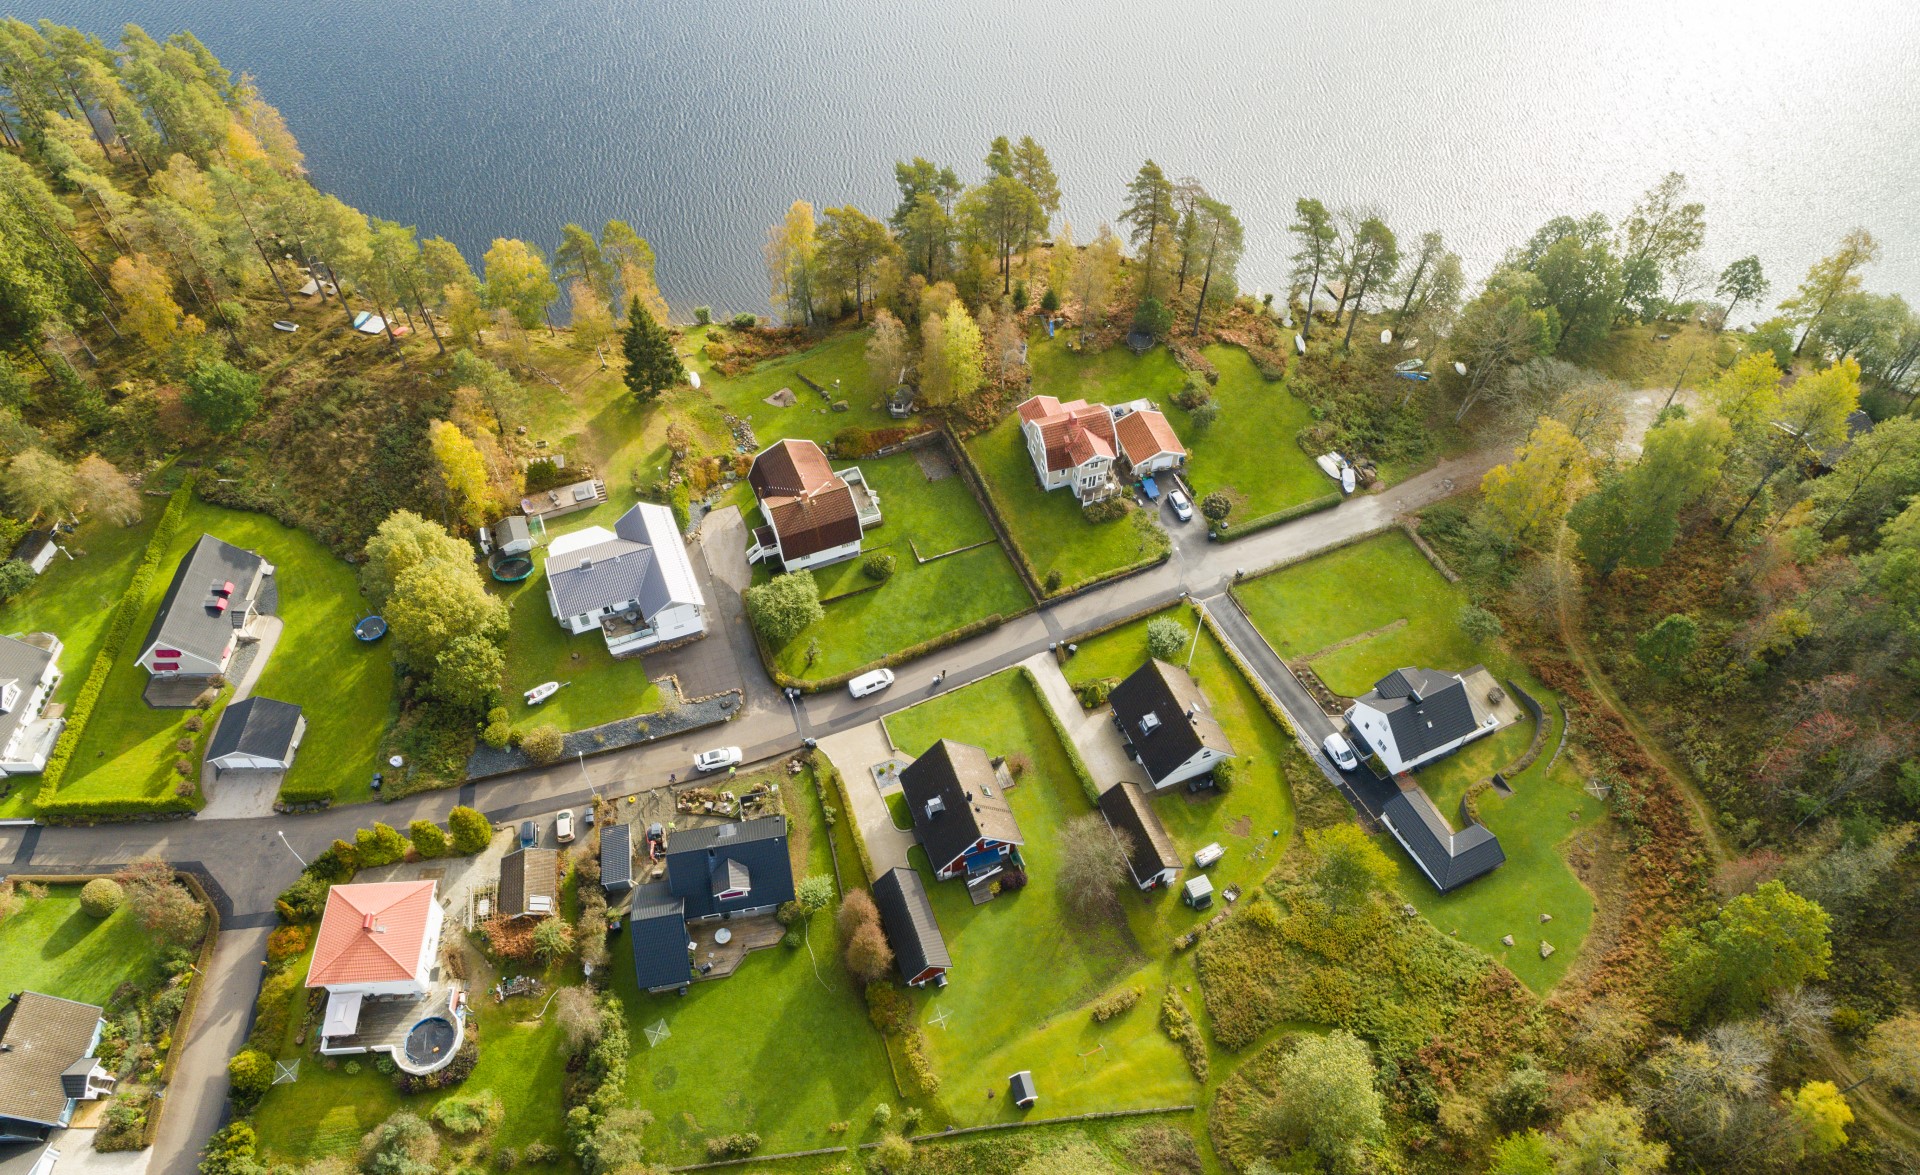 Hus, bebyggelse, strandn, sjö, #33770033, Foto: Jan Kansanen, Mostphotos